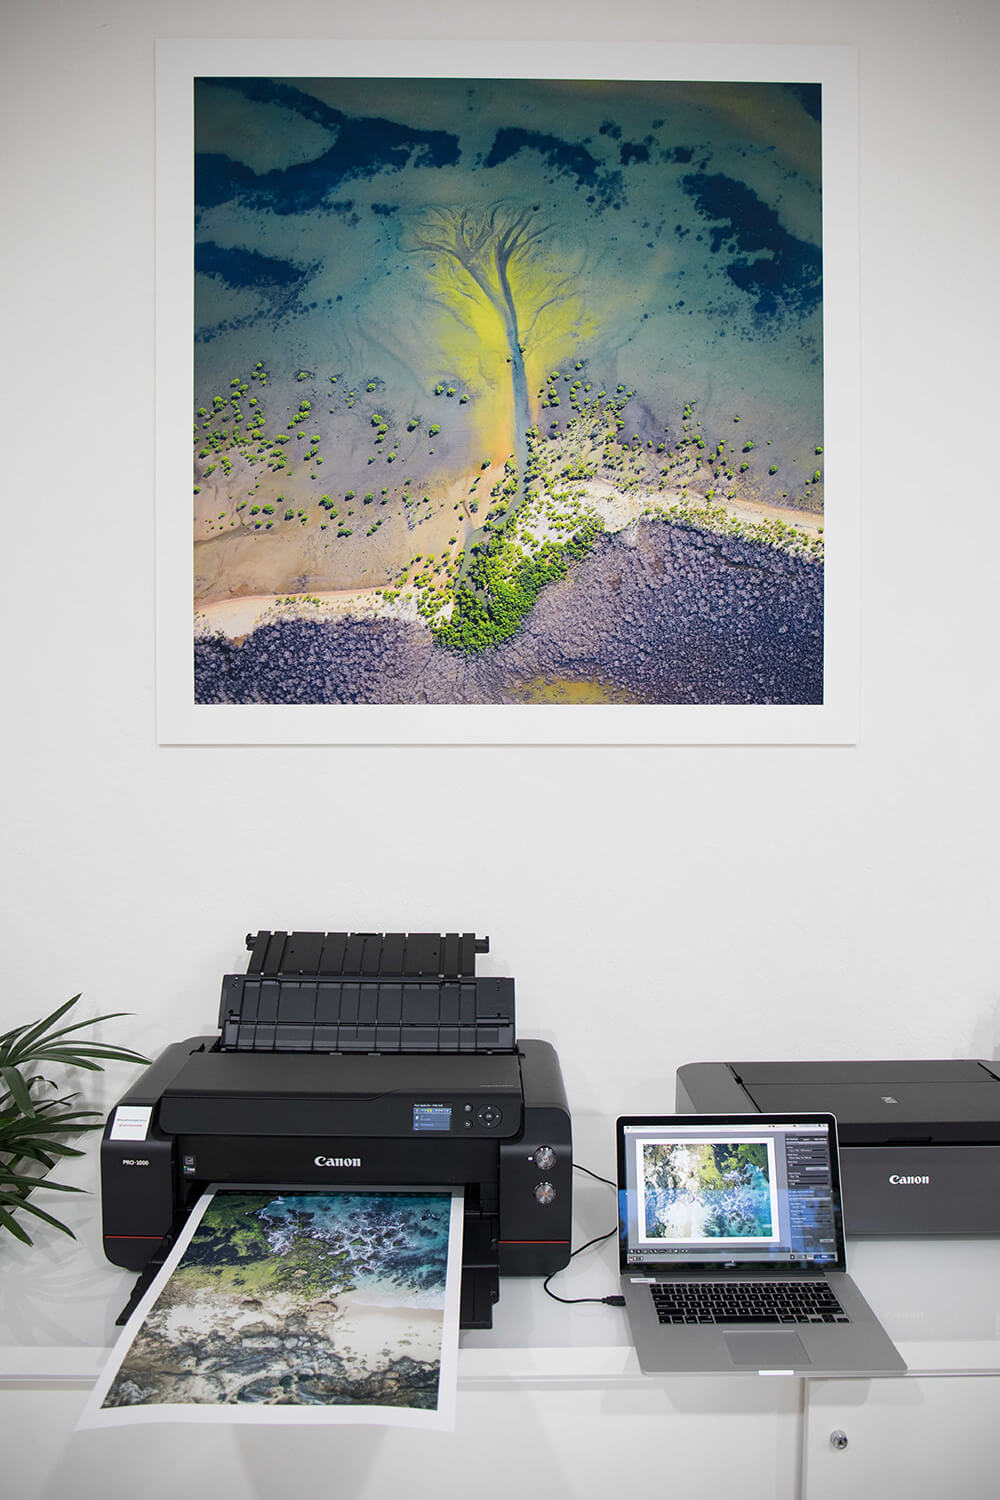 Image of a Canon imagePROGRAF PRO-1000 printer.